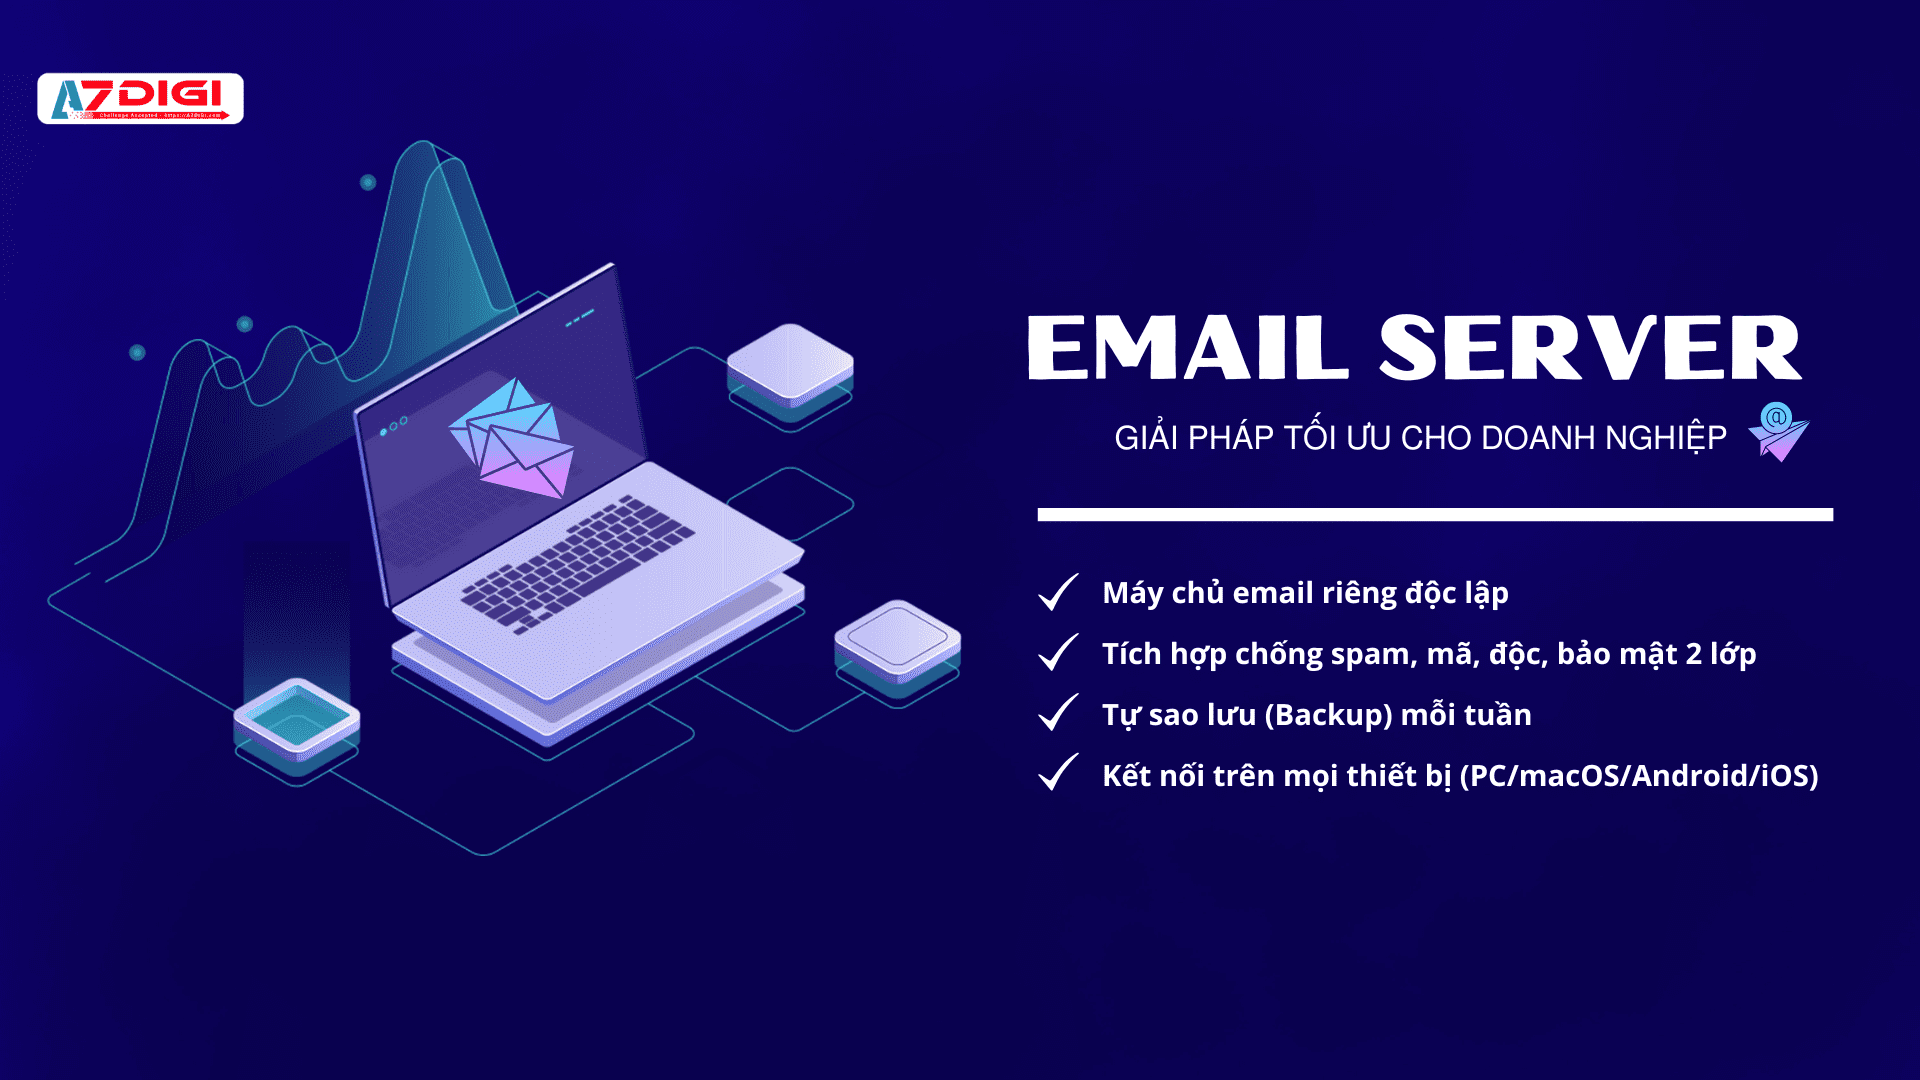 Email Server Service at AZDIGI